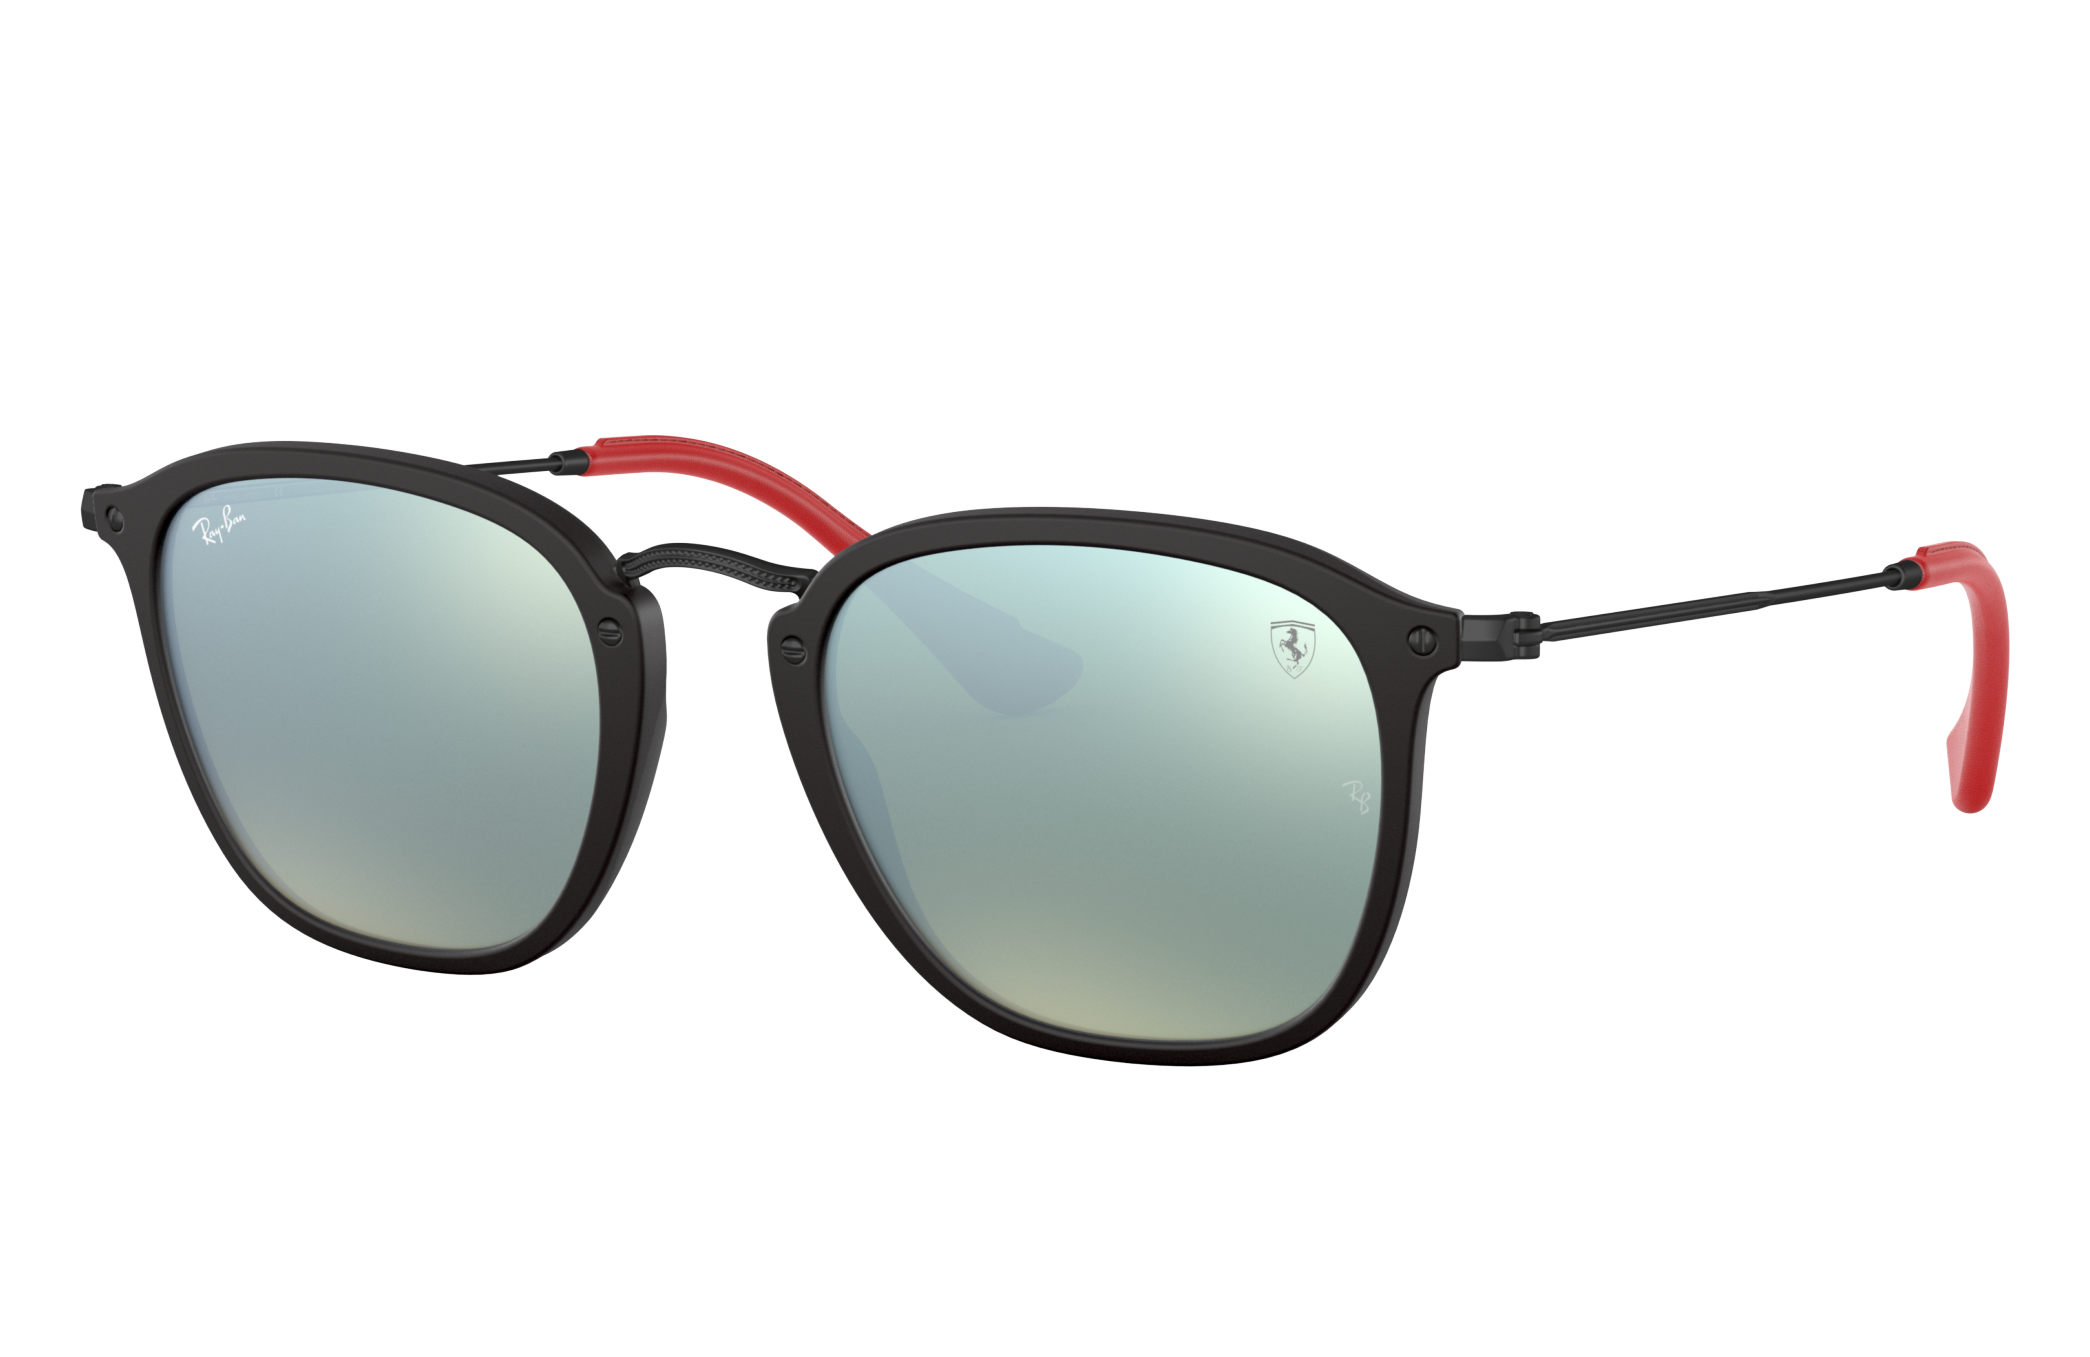 Europe Meditative effective Rb2448nm Scuderia Ferrari Collection Sunglasses in Black and Silver | Ray- Ban®